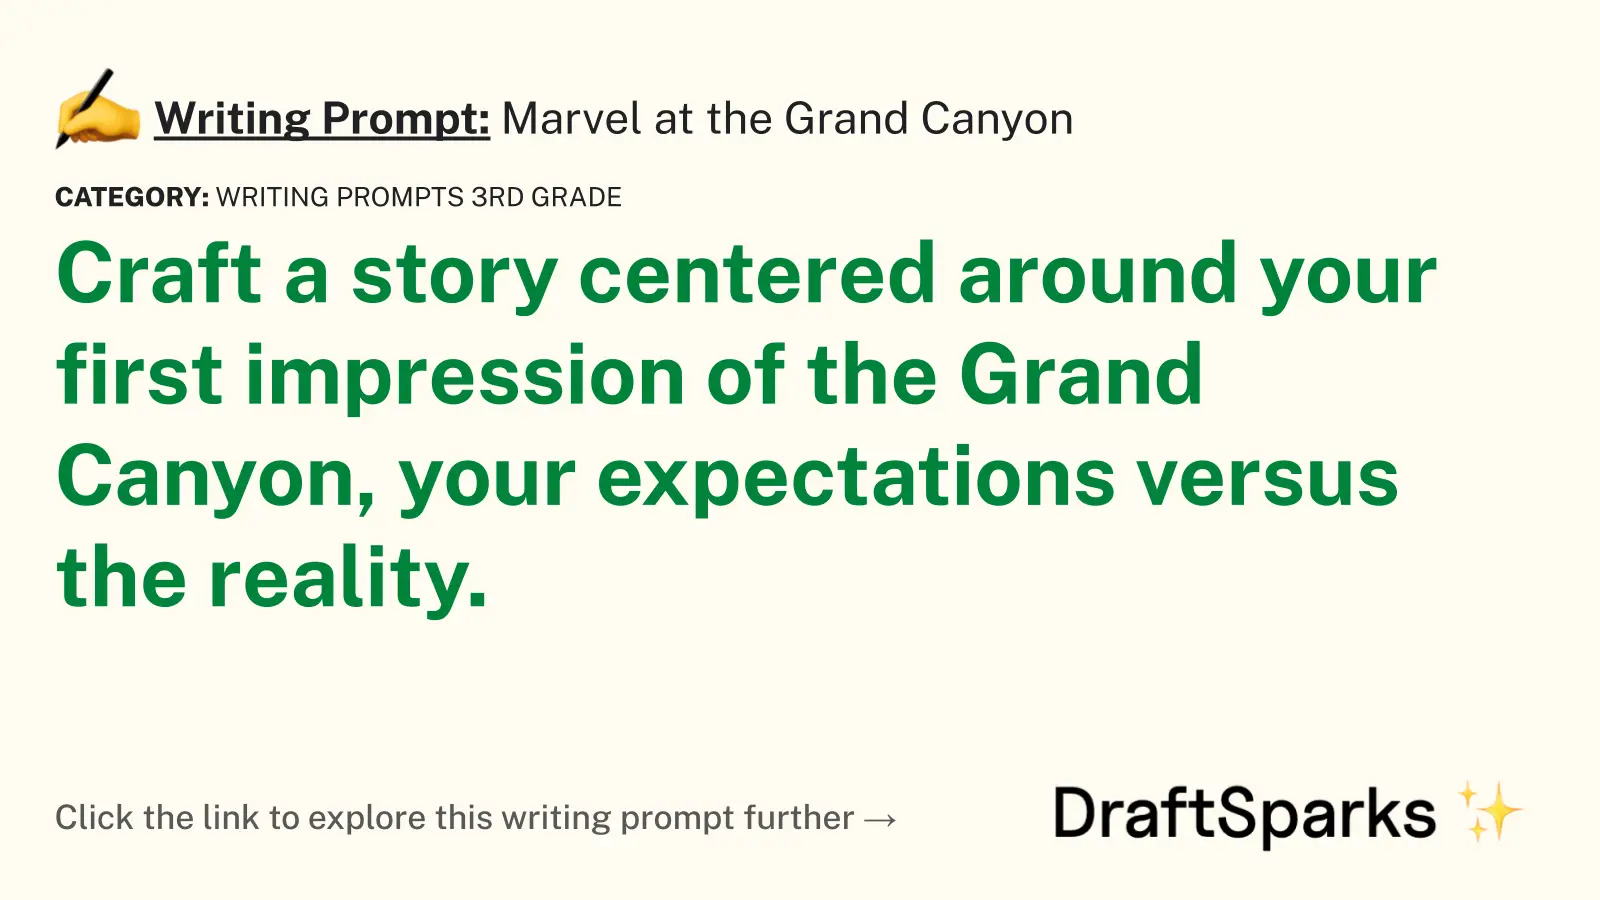 Marvel at the Grand Canyon